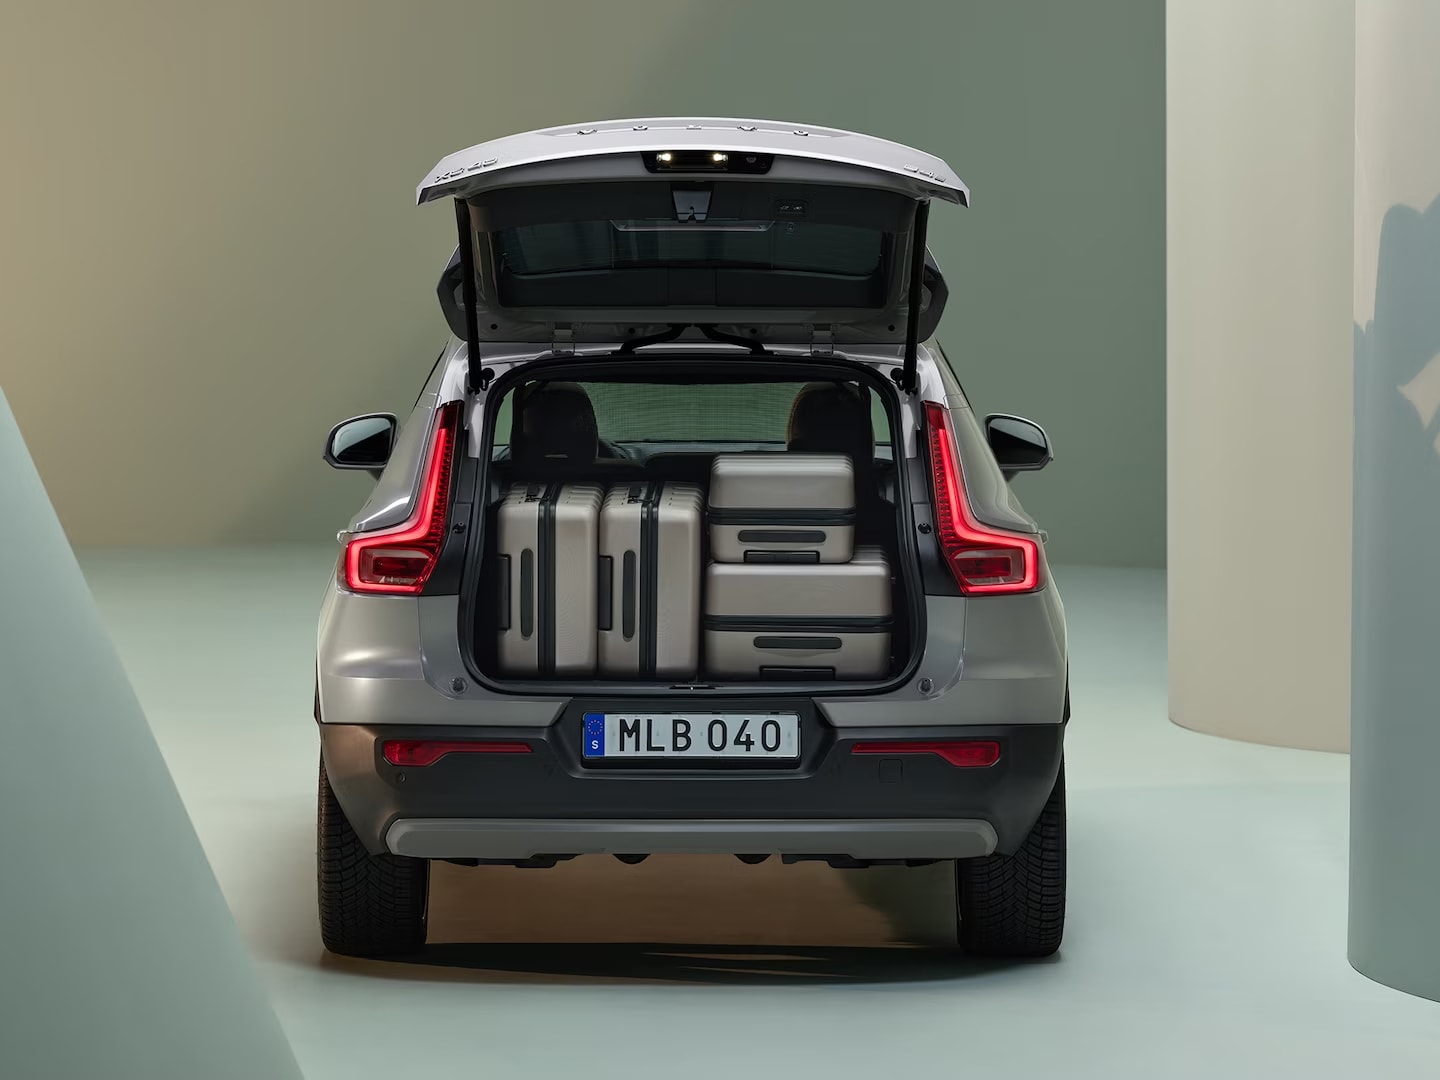 The trunk of the Volvo XC40 mild hybrid SUV optimizes storage capacity.